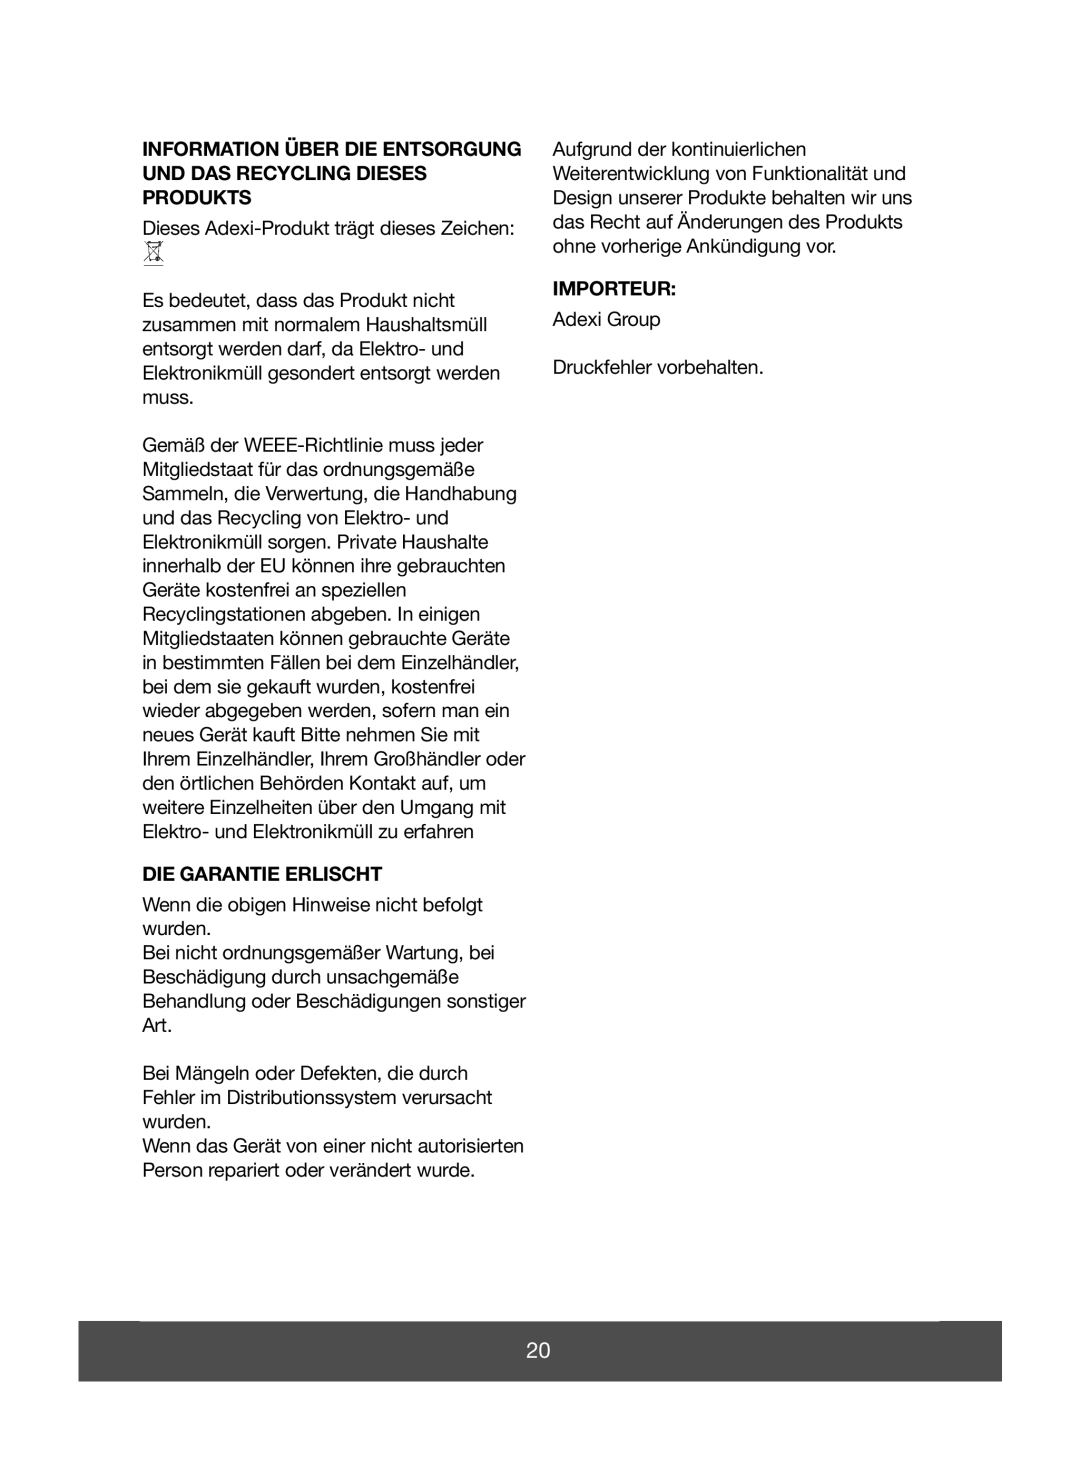 Melissa 640-063, 640-054 manual Die Garantie Erlischt, Importeur 